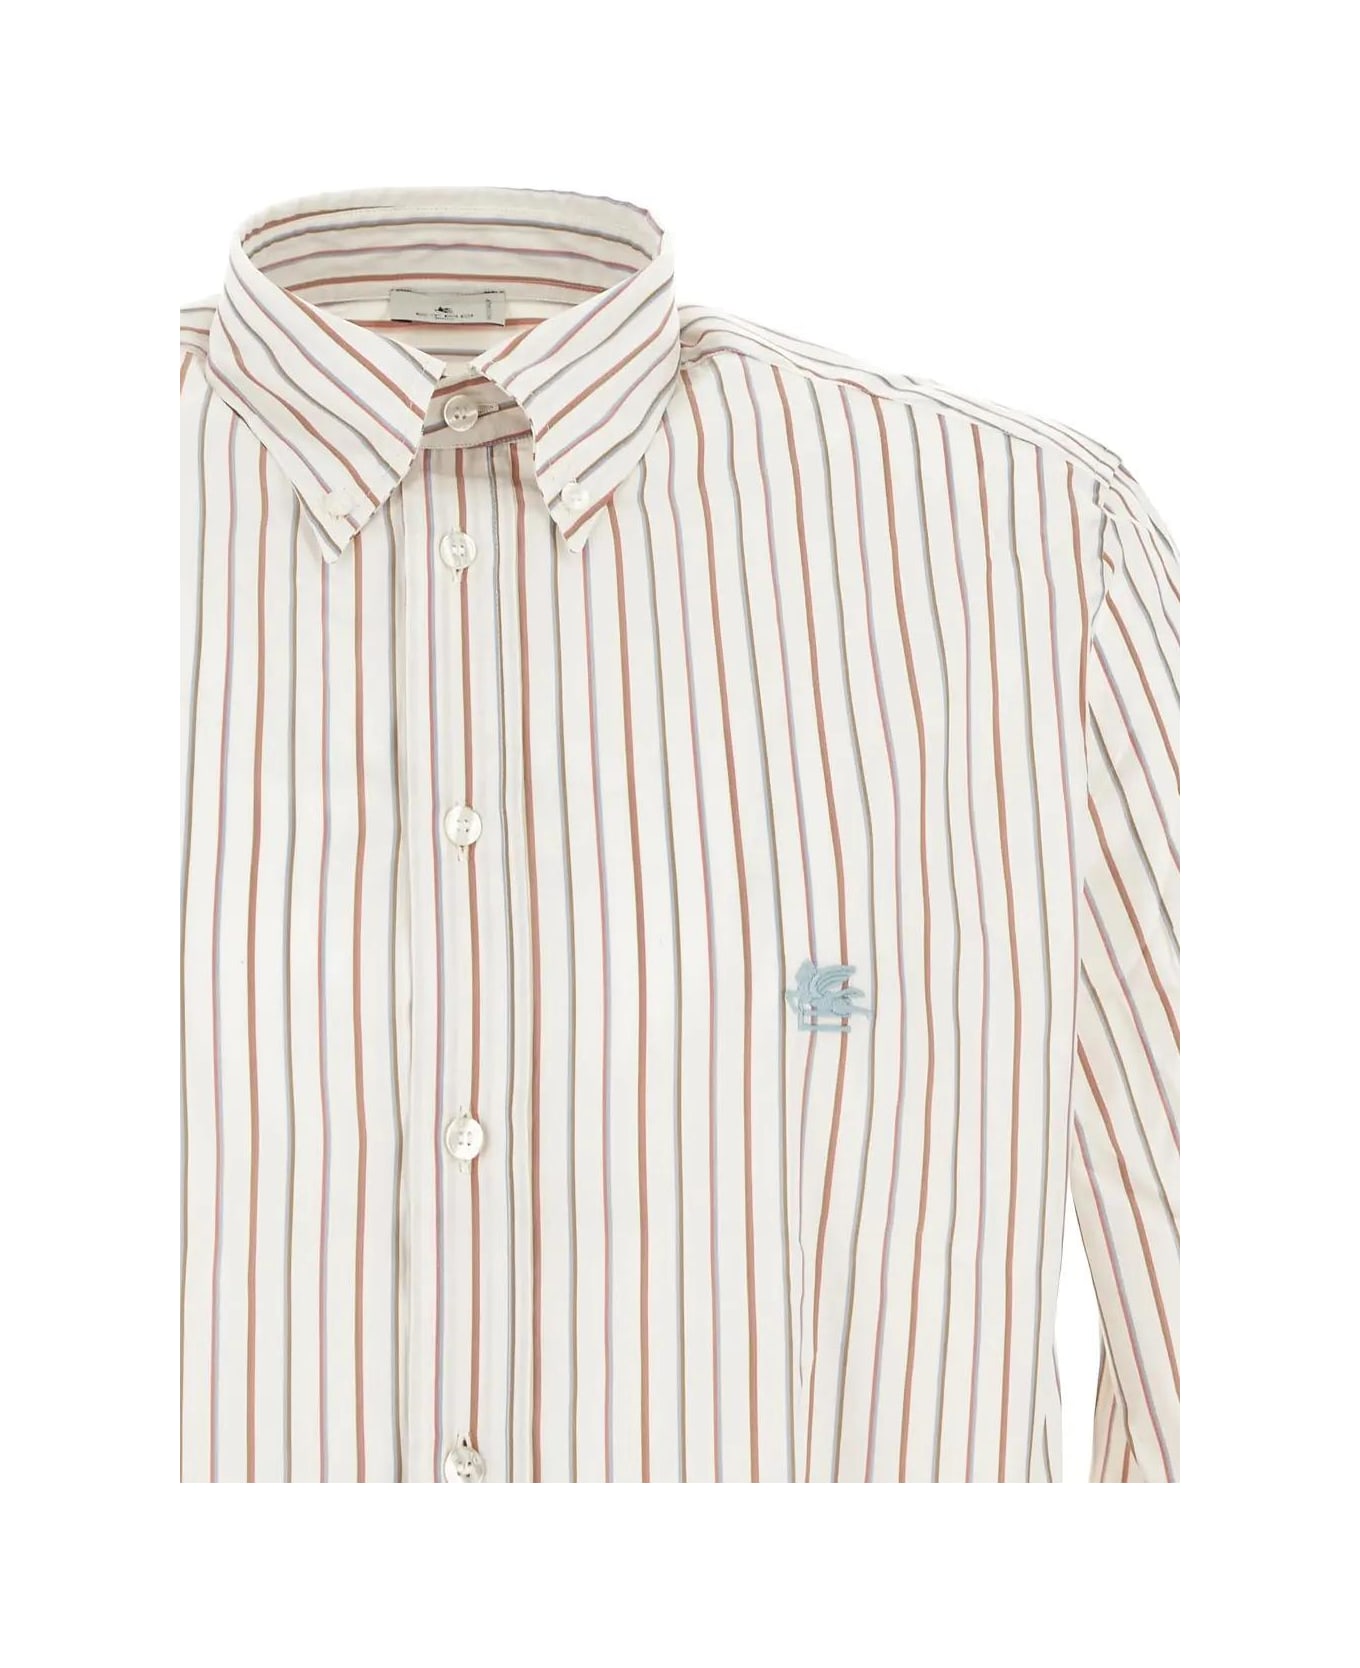 Etro Stripes Shirt - Bianco/righe